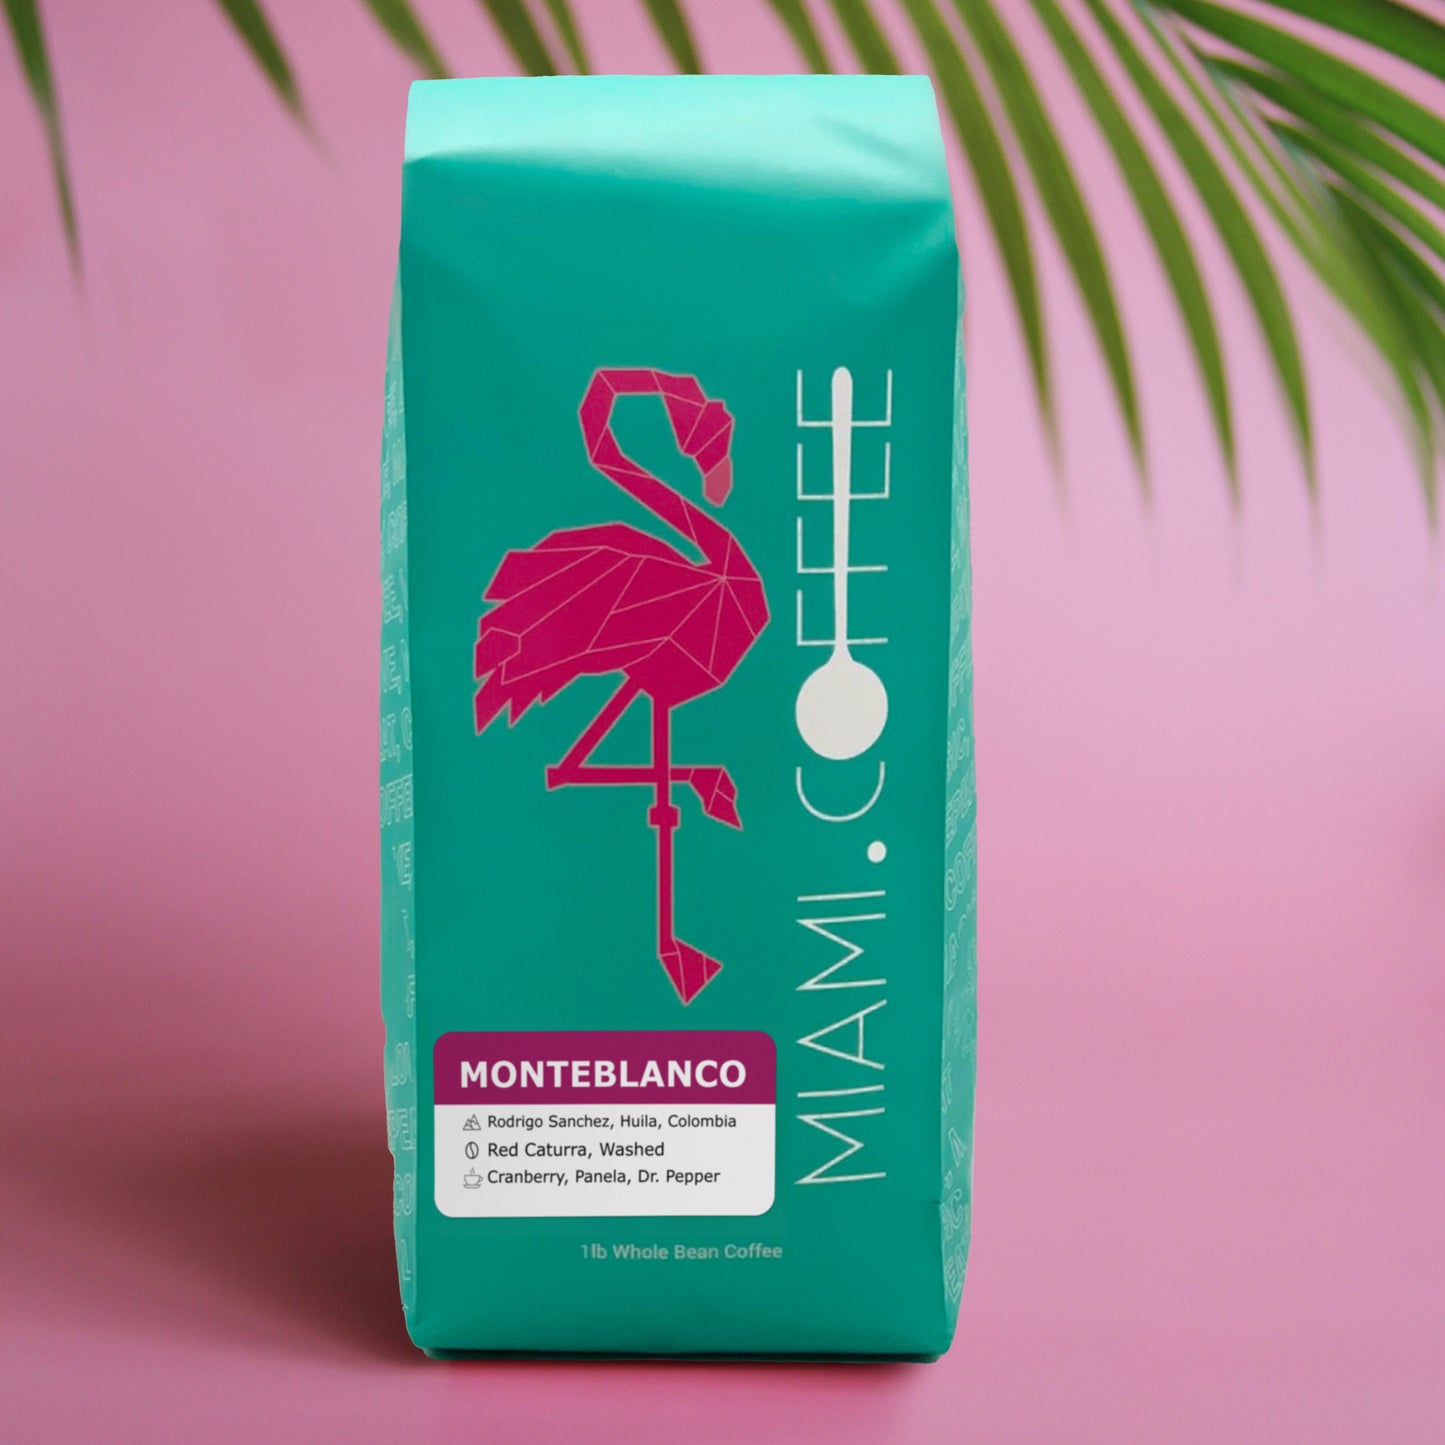 1 pound bag of Miami.Coffee Colombia Monteblanco Farm in Huila, Producer Rodrigo Sanchez, Caturra cultivar, washed process, tasting notes: Cranberry, Panela, Dr Pepper